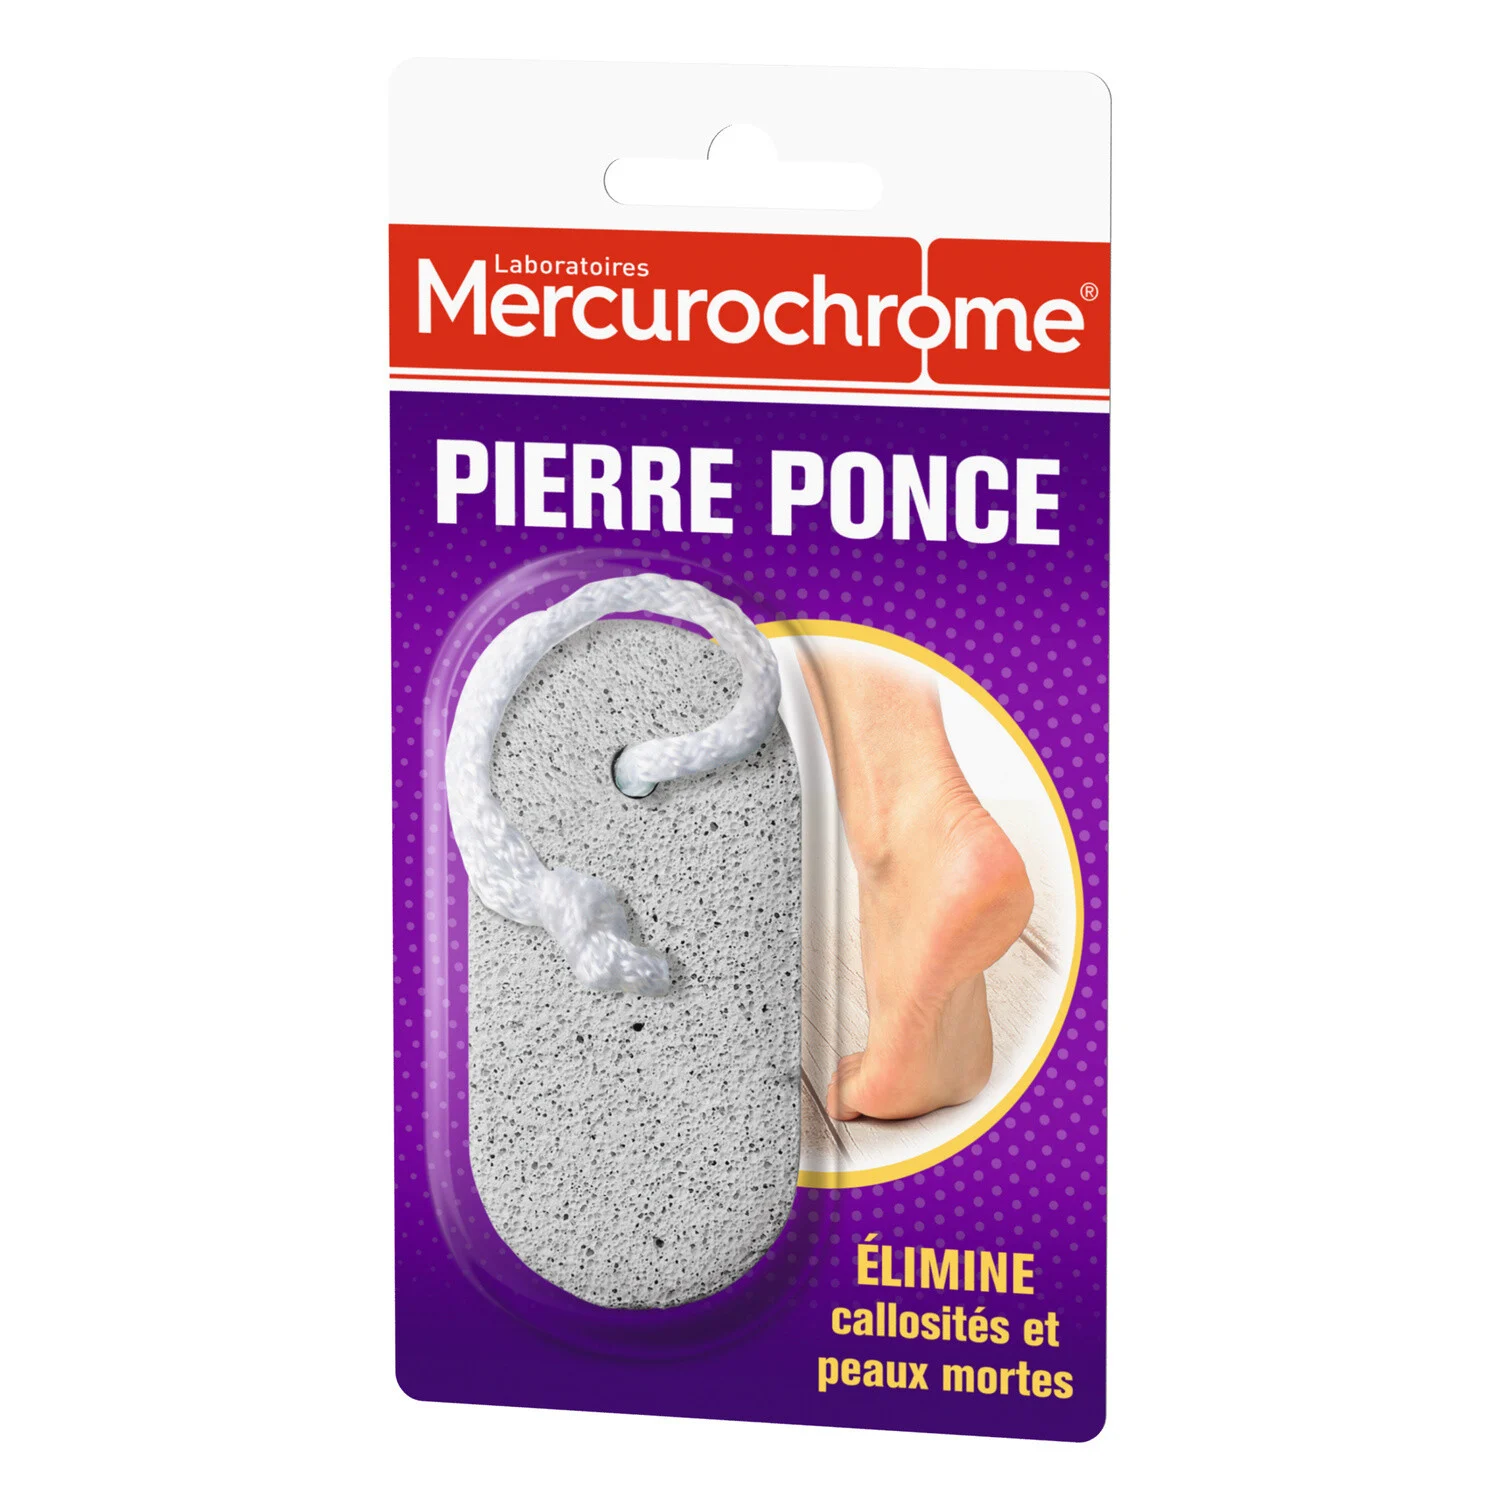 Pierre Ponce - Mercurochrome